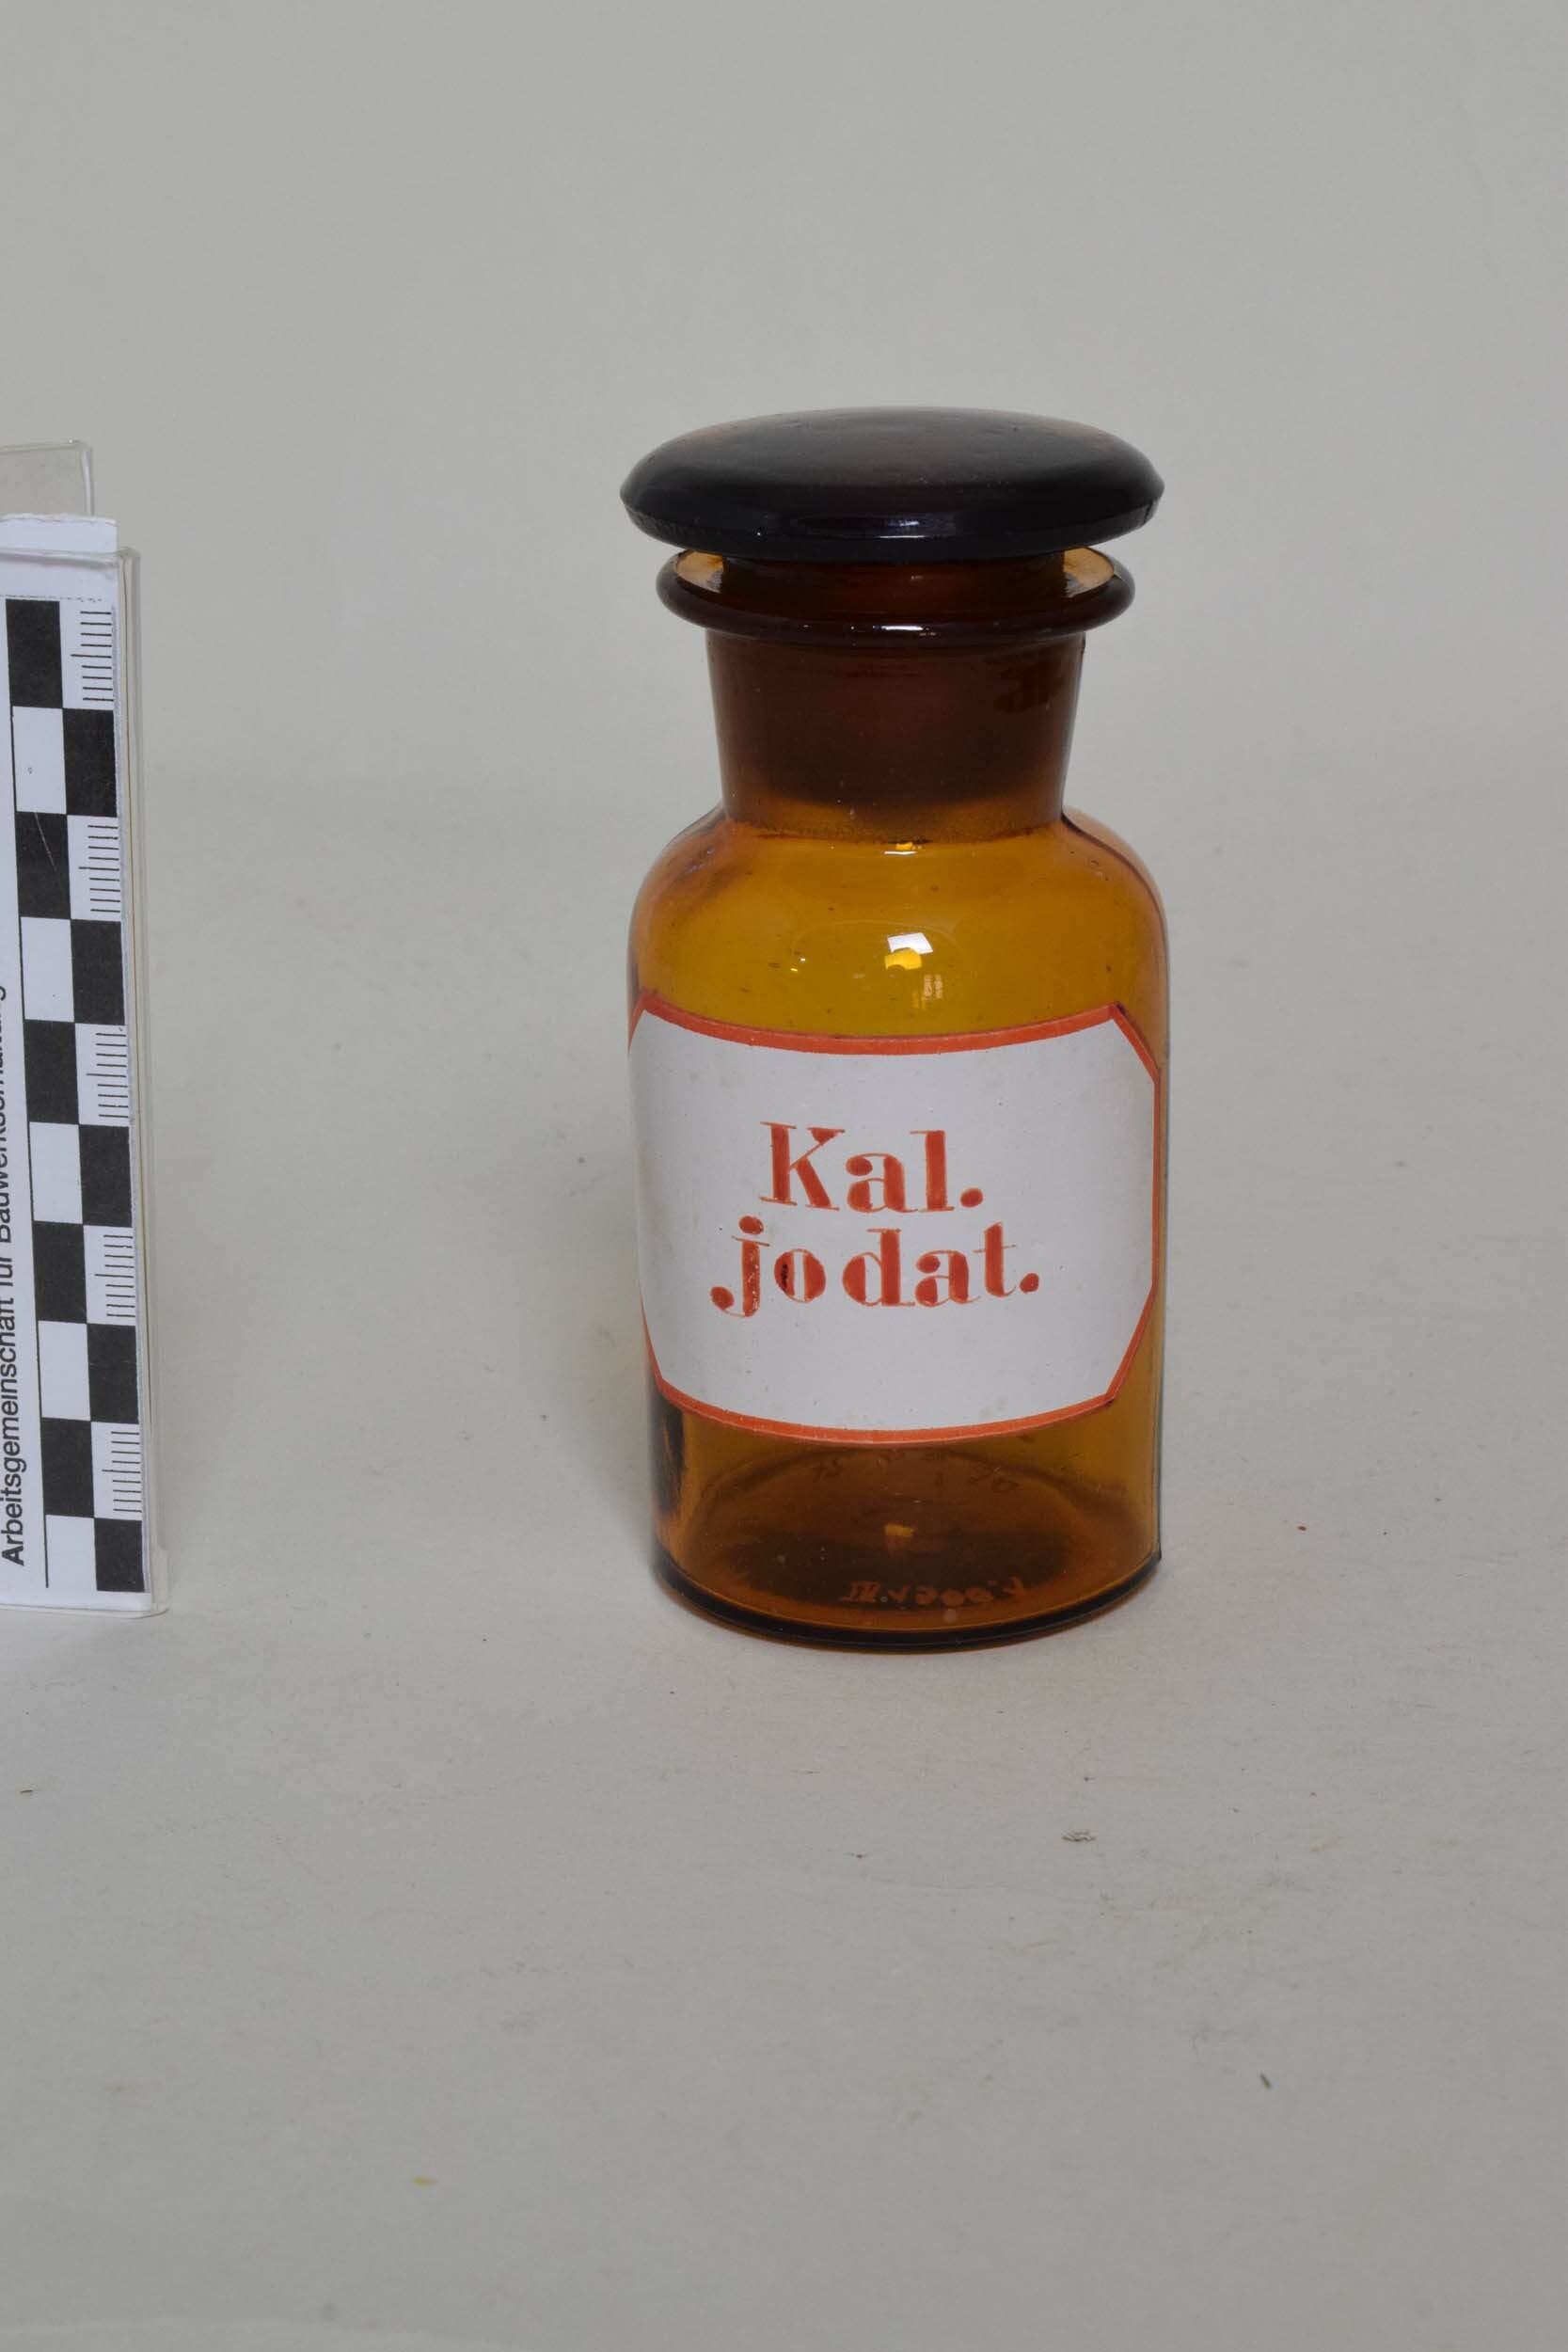 Apothekenflasche "Kal. jodat." (Heimatmuseum Dohna CC BY-NC-SA)